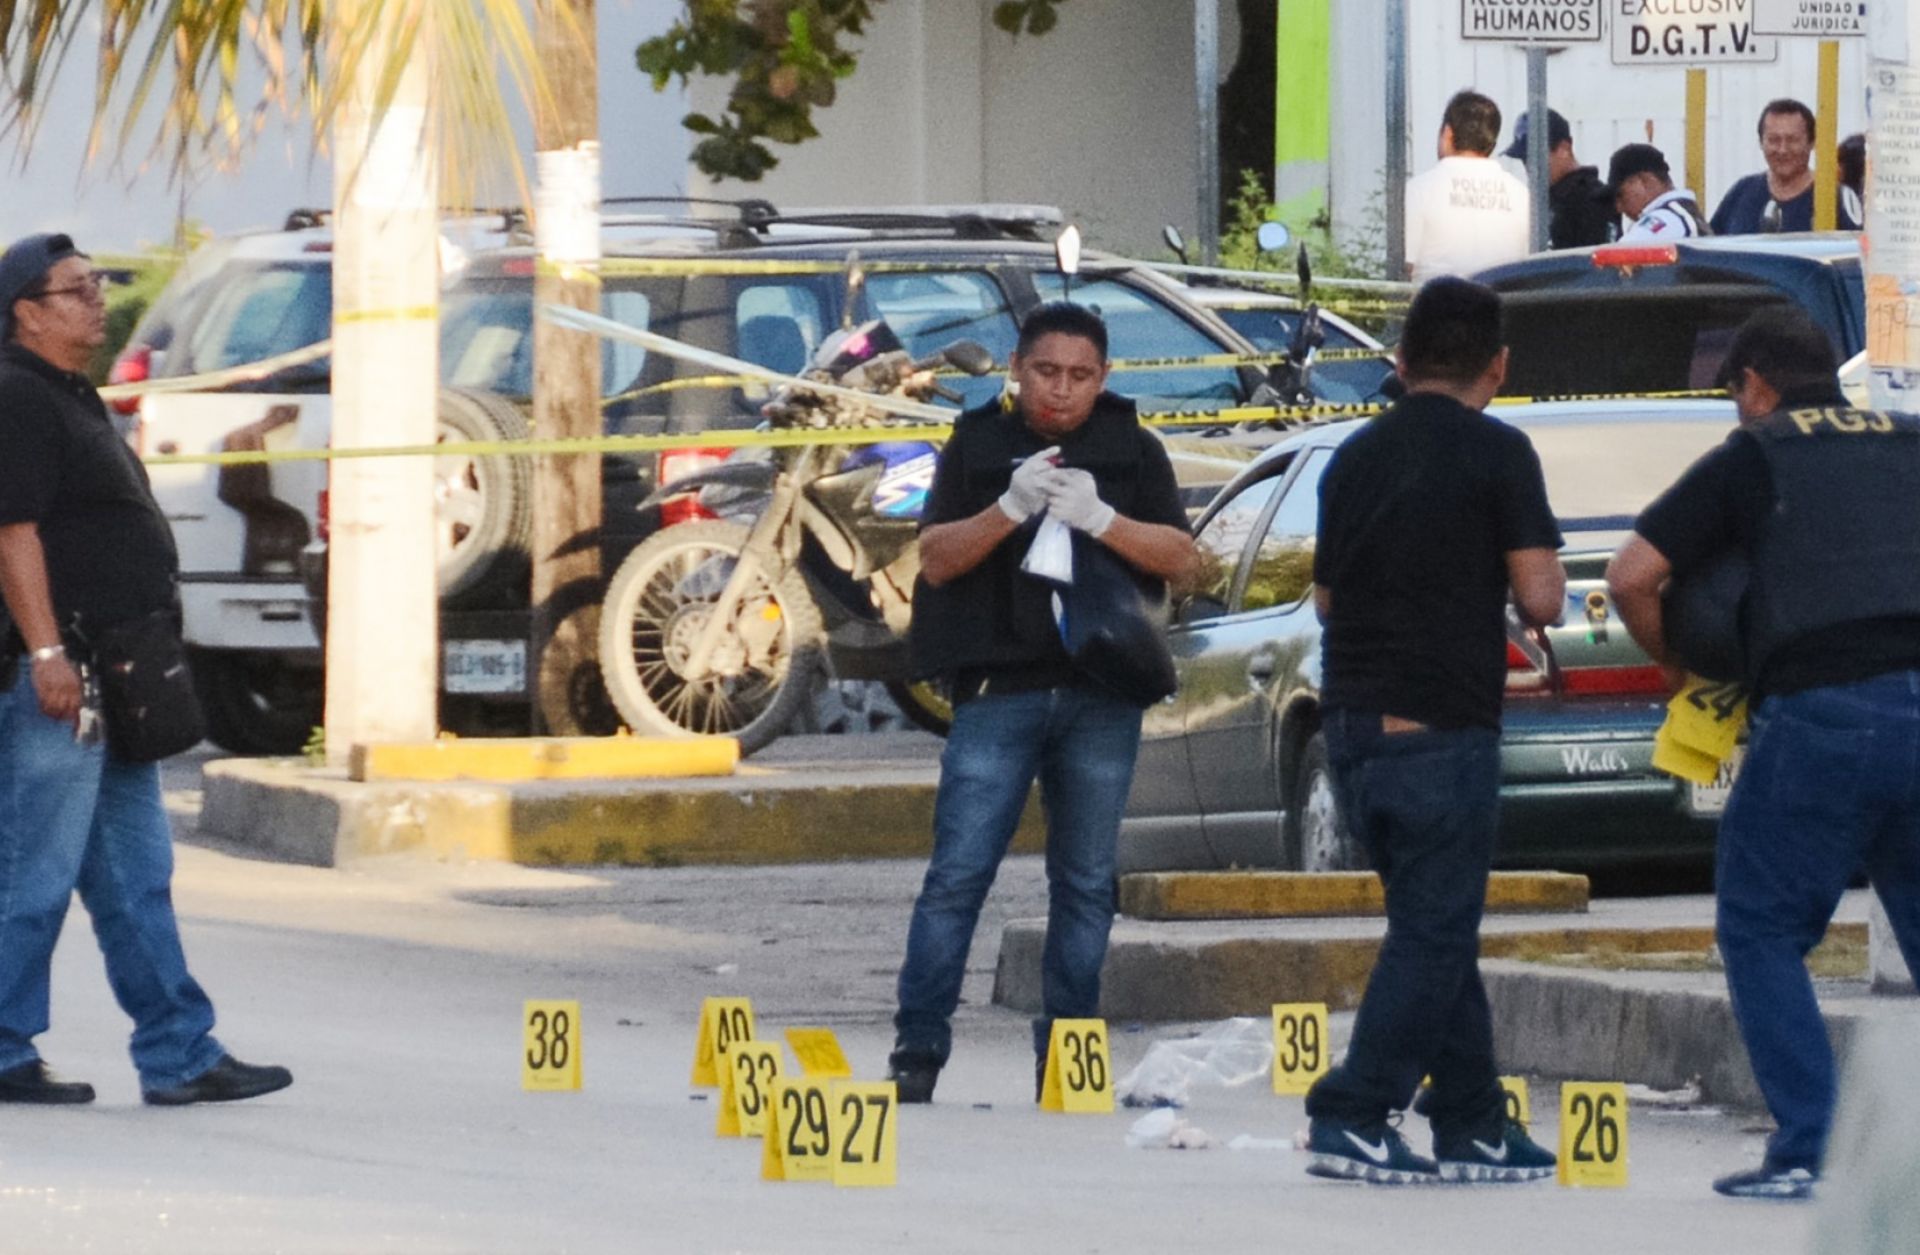 Investigators work a crime scene in Cancun, Mexico, where a gunfight erupted on Jan. 17.